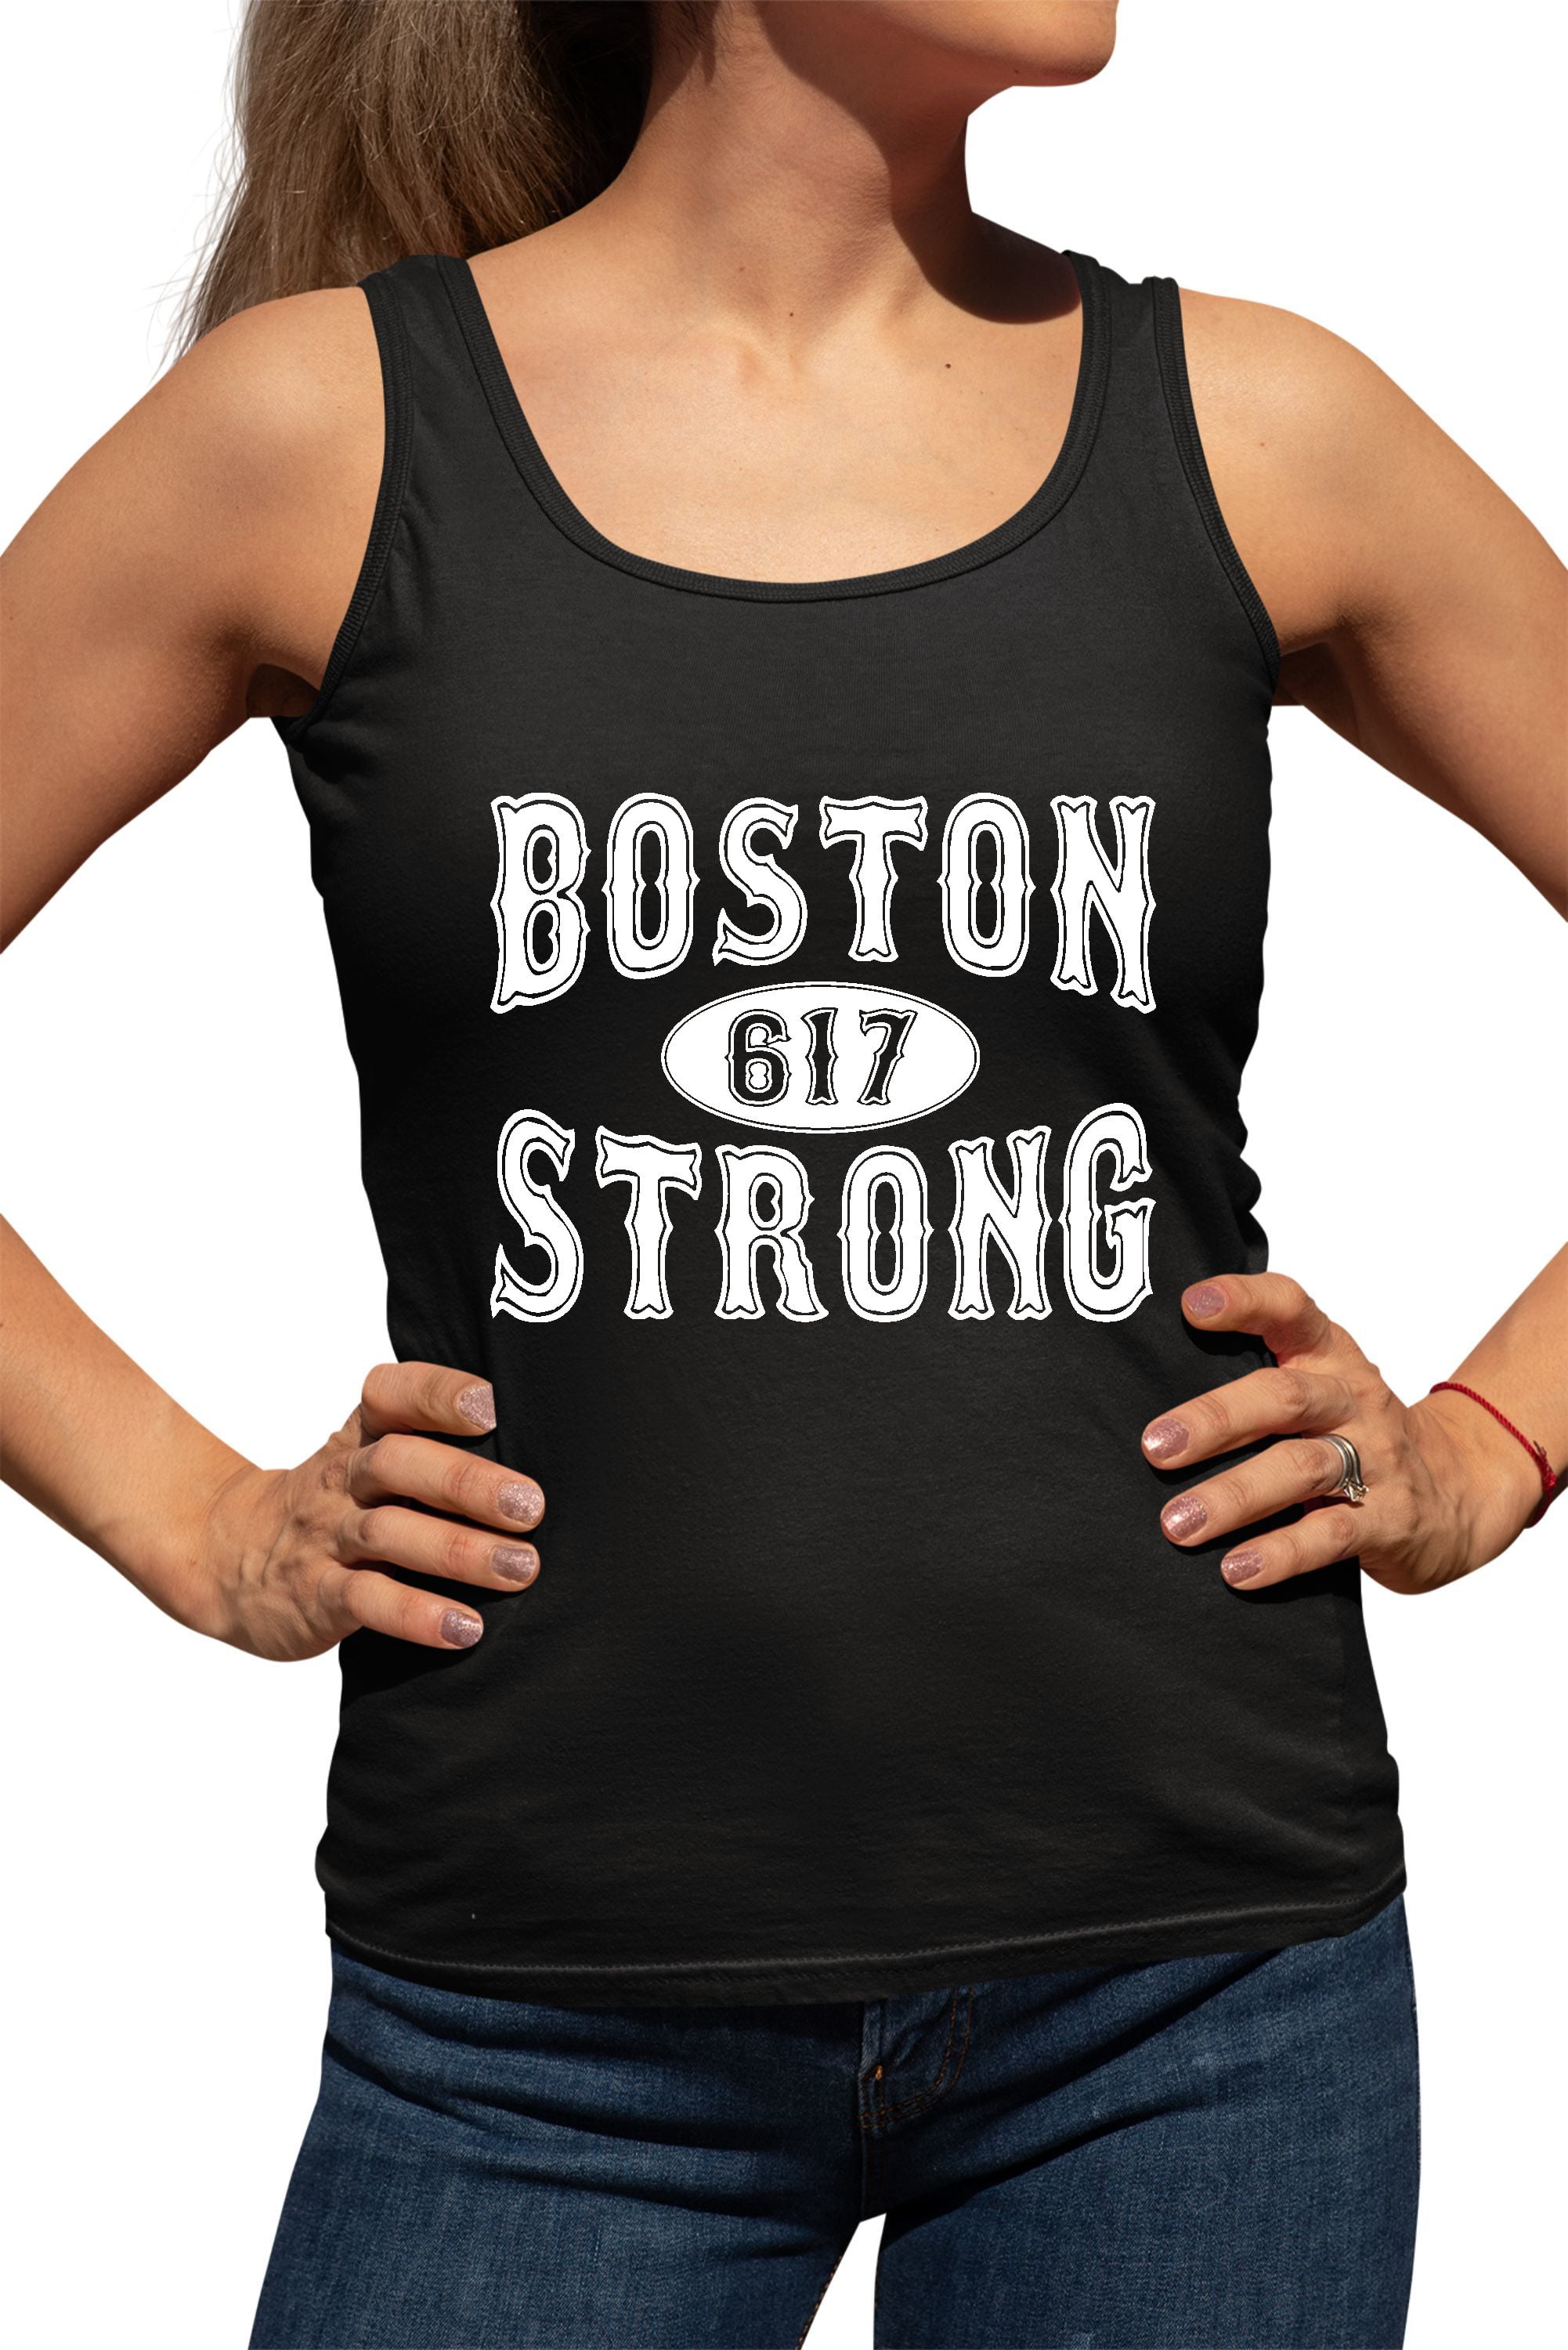 Boston Strong 617 Tank Top